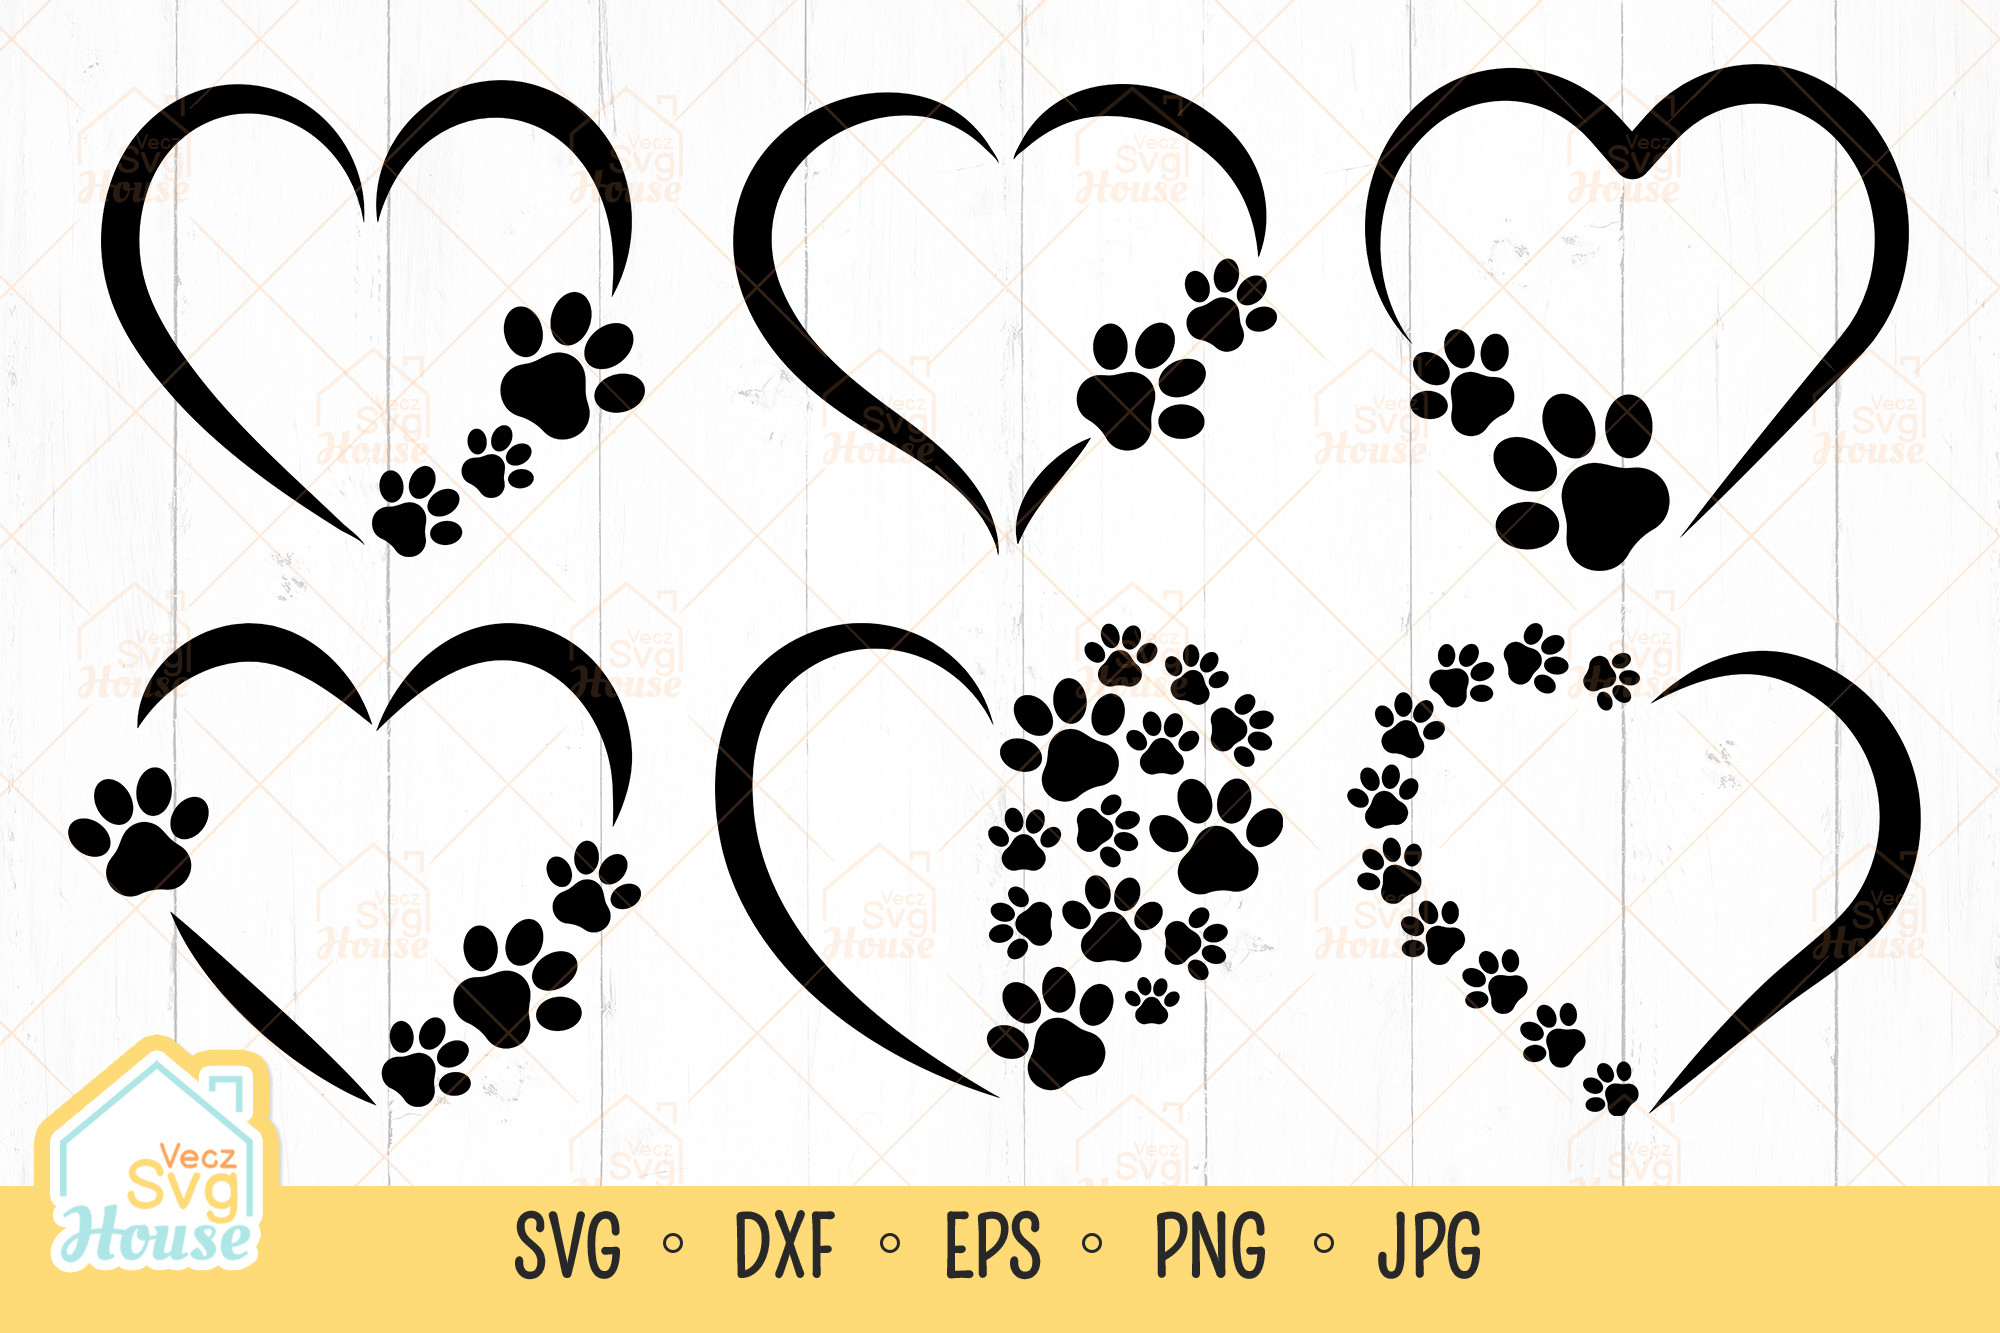 Dog Paw SVG: 10 Designs  Dog paws, Dog paw print craft, Paw print